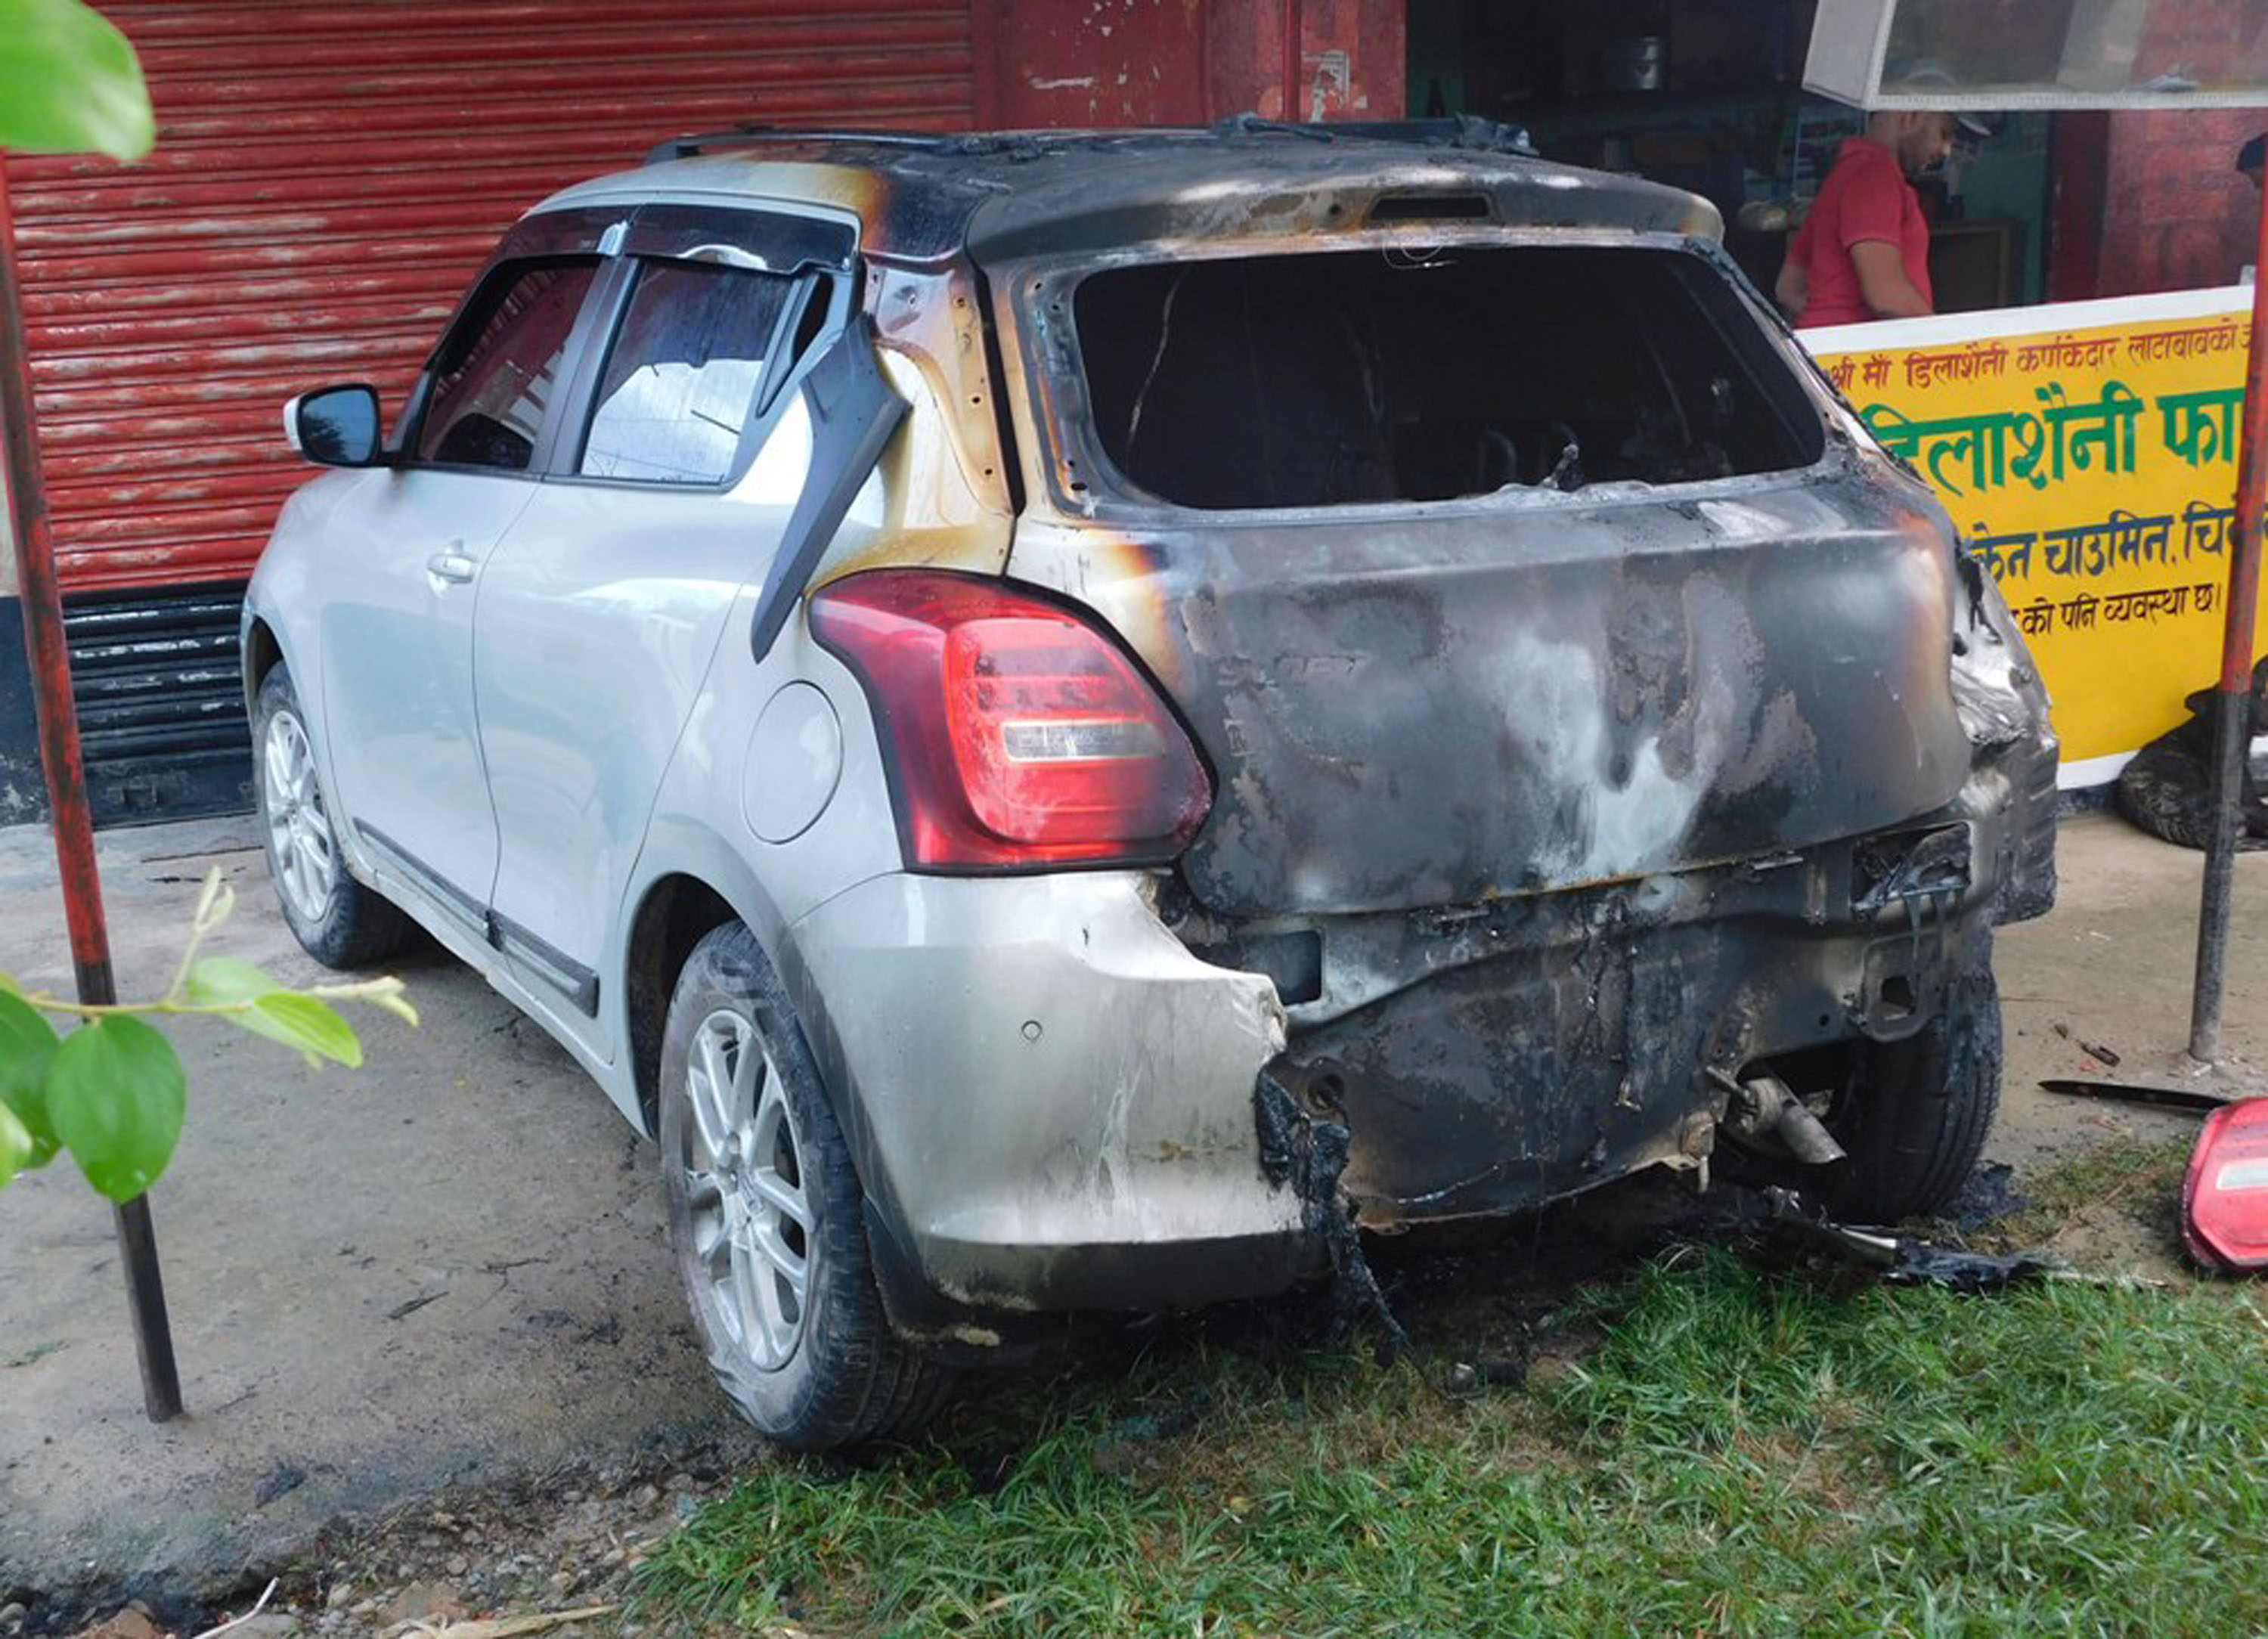 Municipality spokesperson's vehicle torched